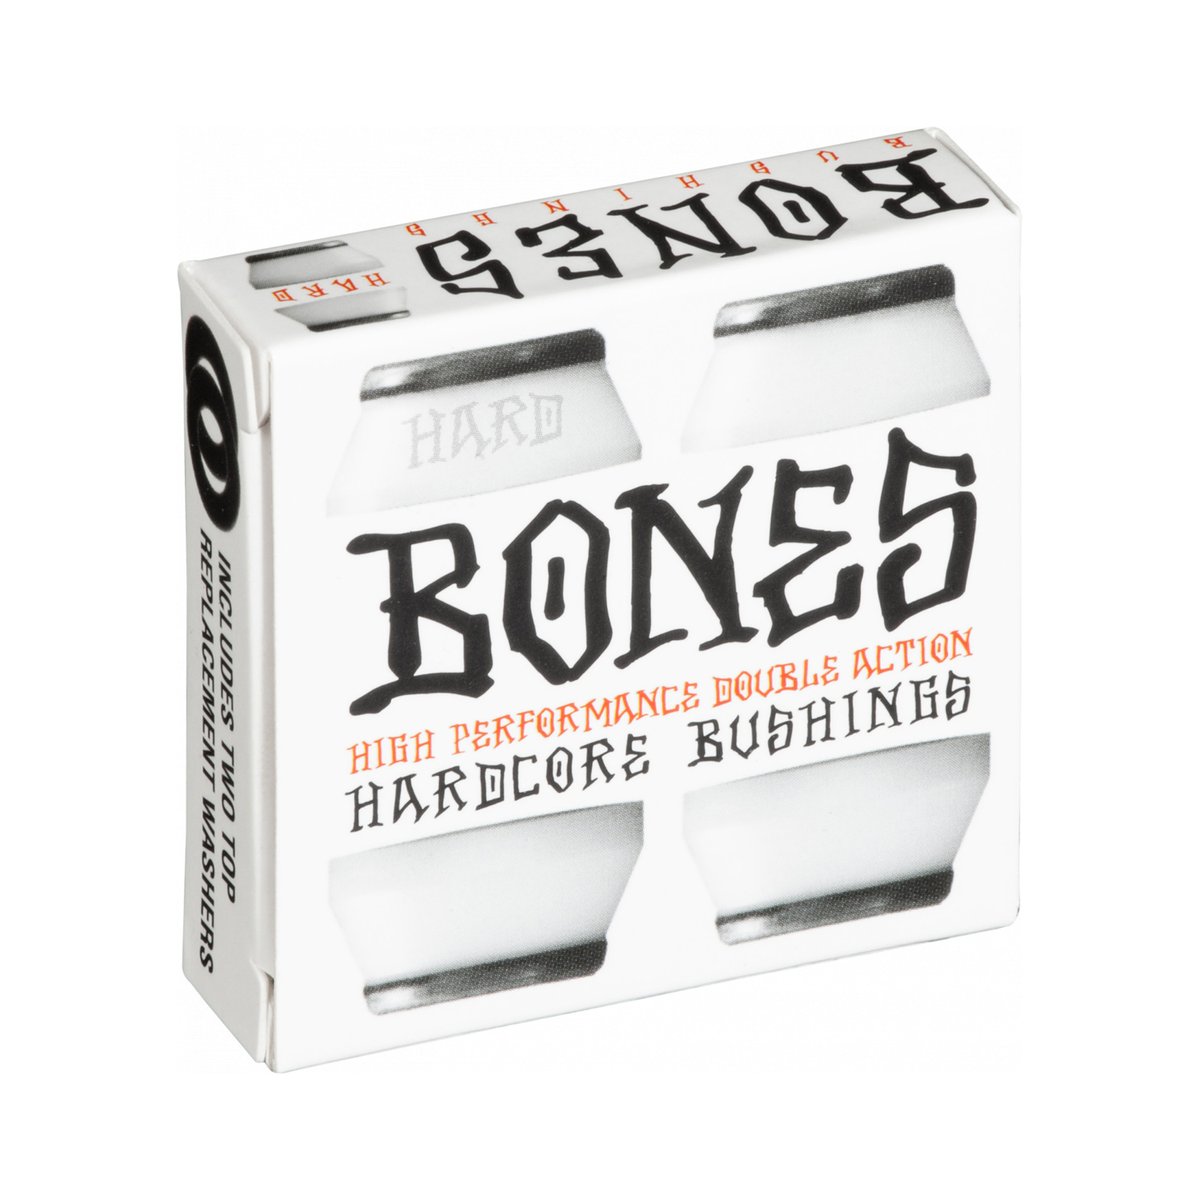 Bones Bushings - Hard - White Black - Invisible Board Shop